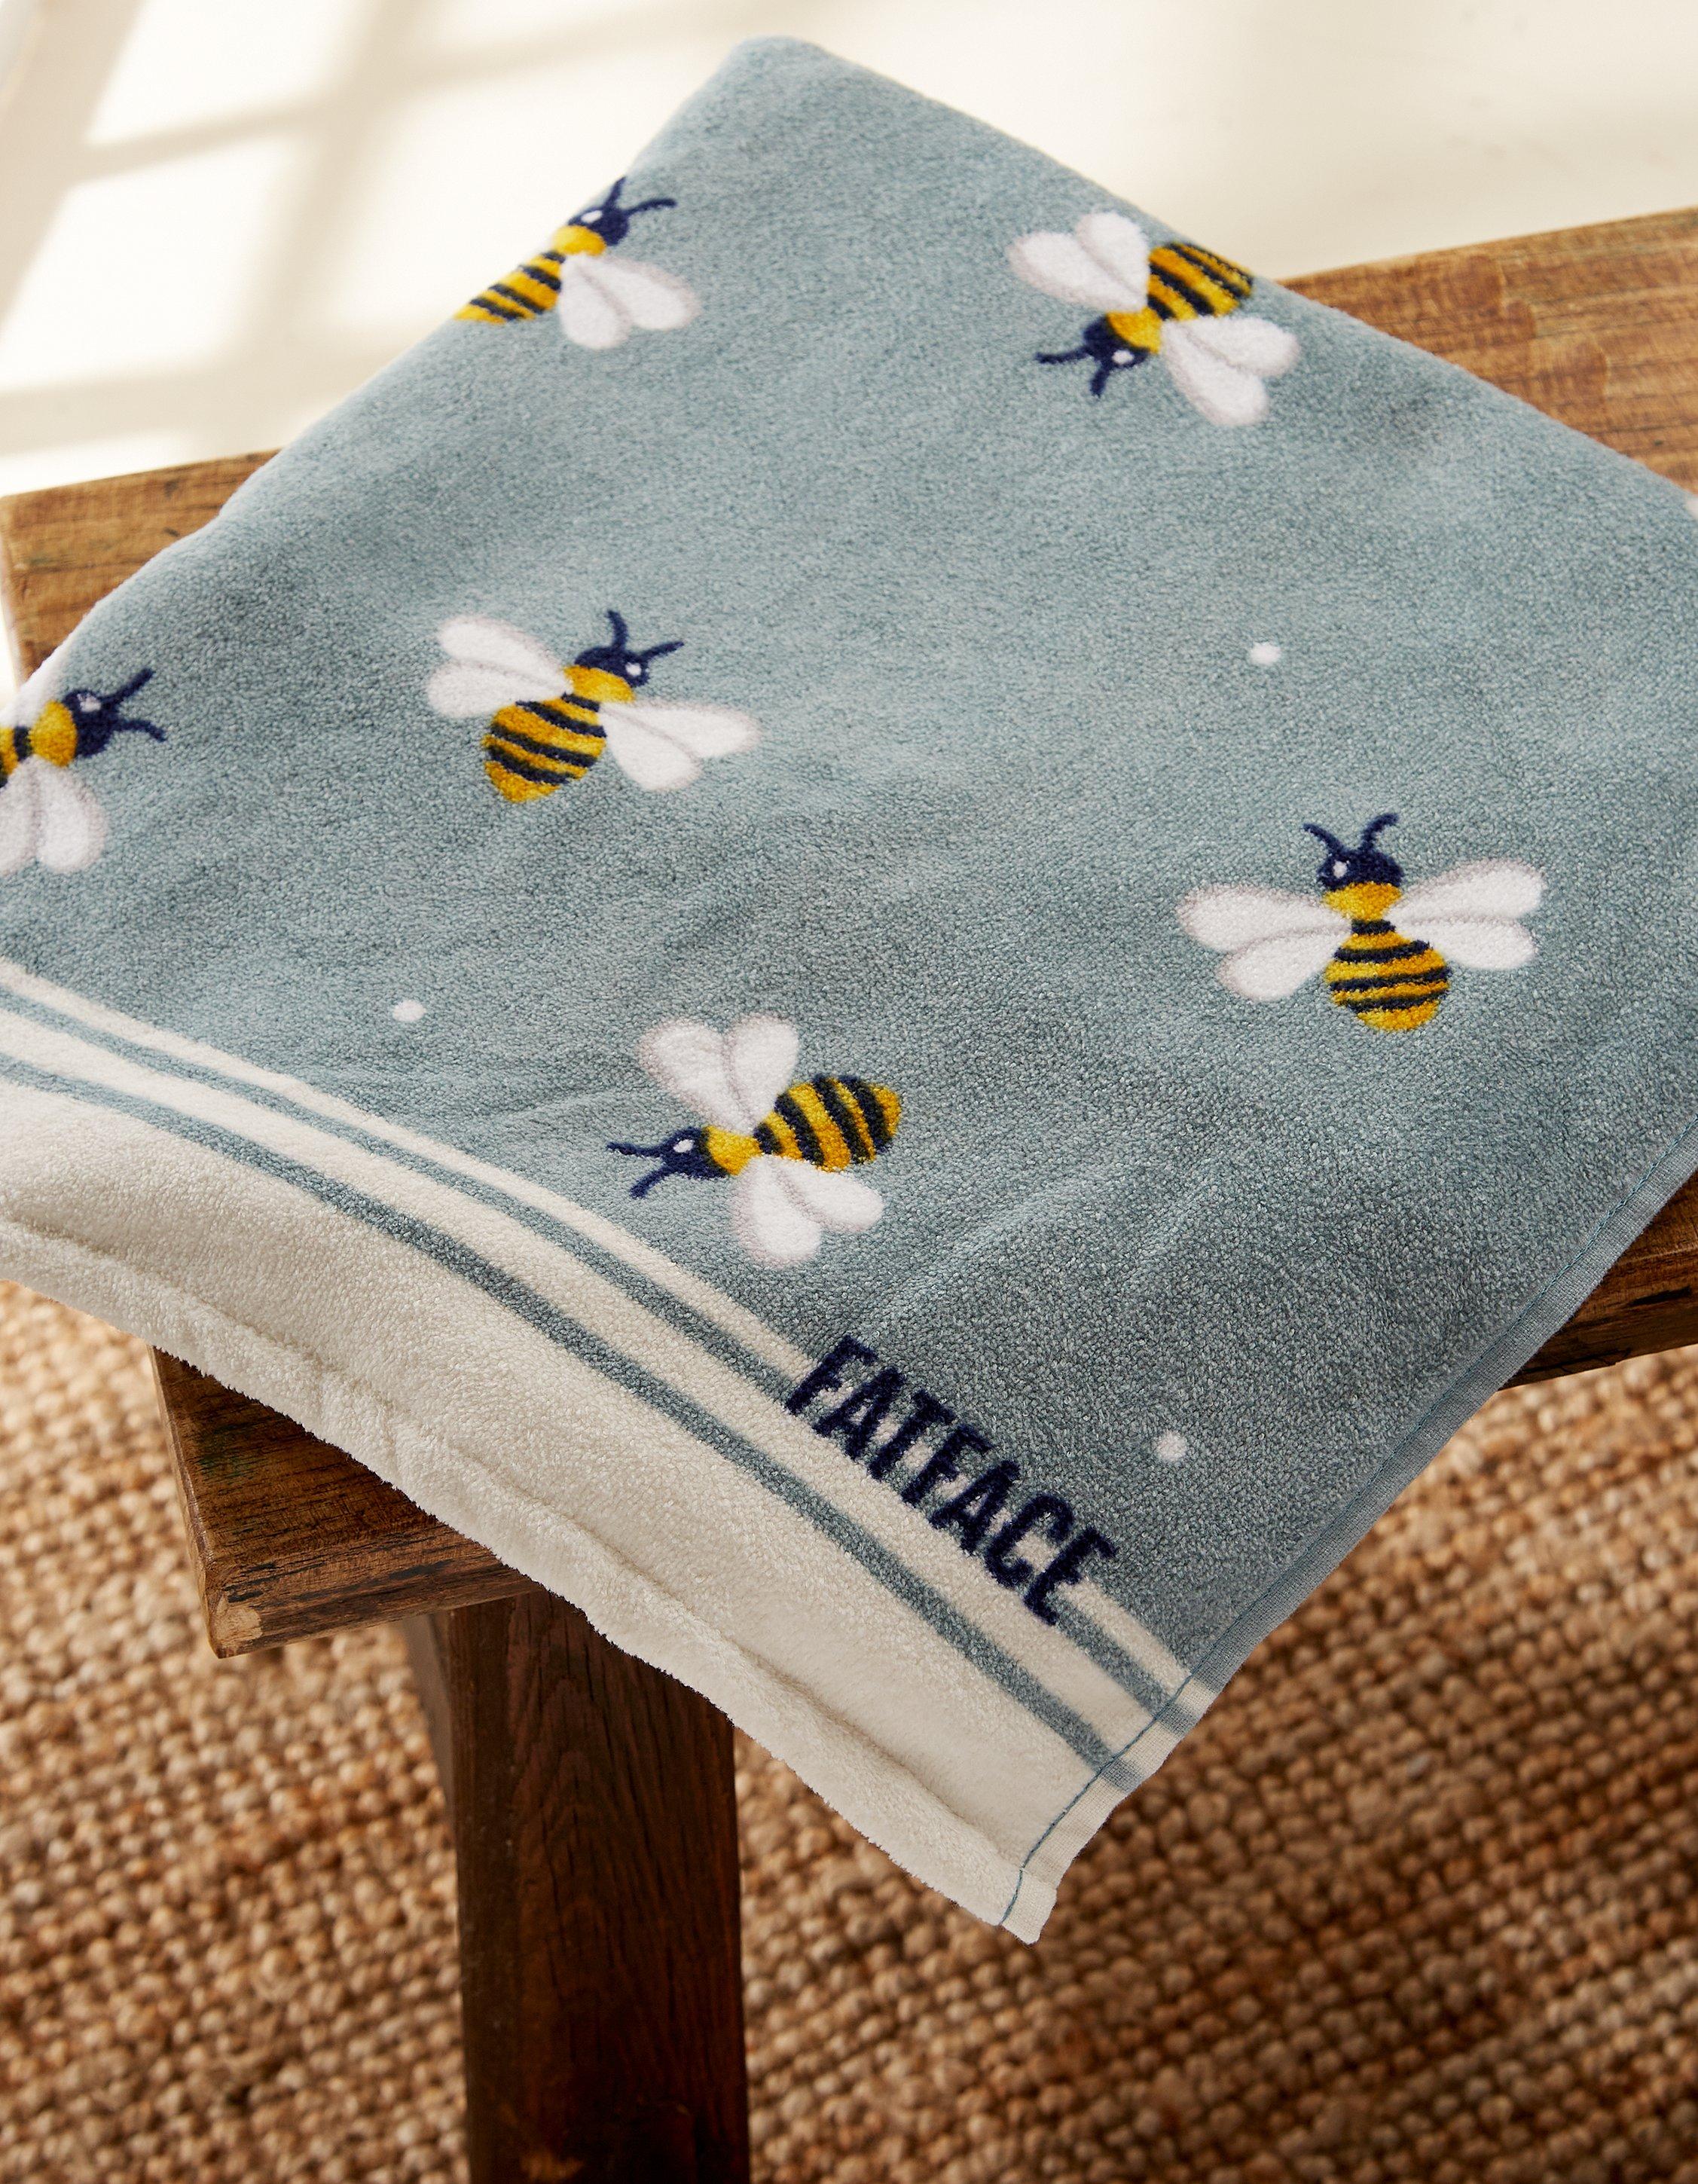 Daisy Honey Bee Bathroom Towel Set,Microfiber Bath Kitchen Beach